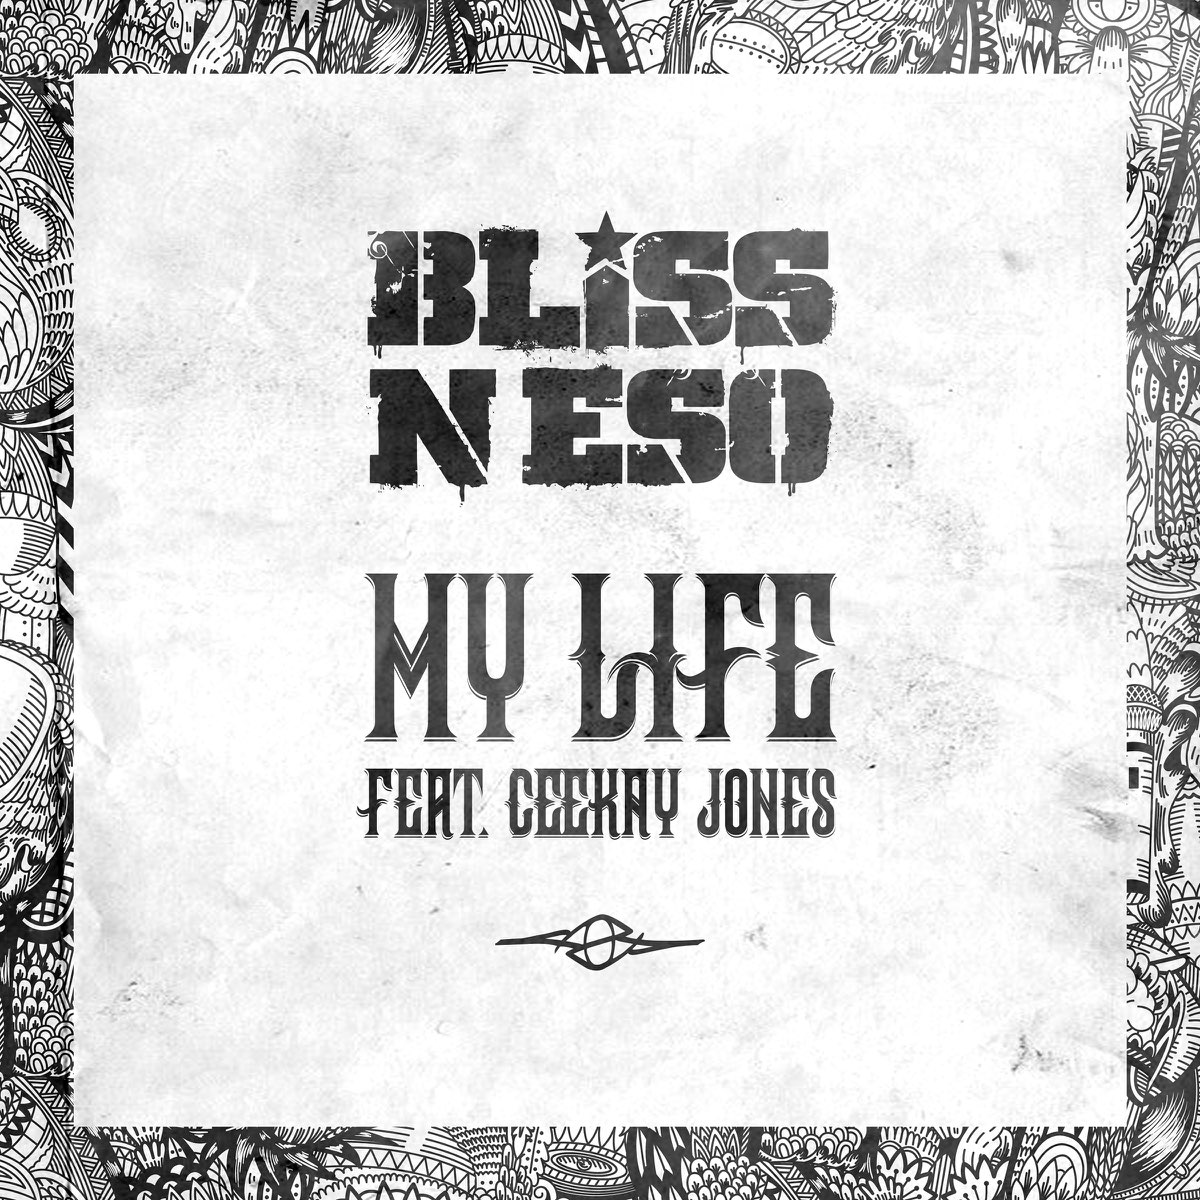 Bliss n eso - my Life (feat. Ceekay Jones). My Life. My life song